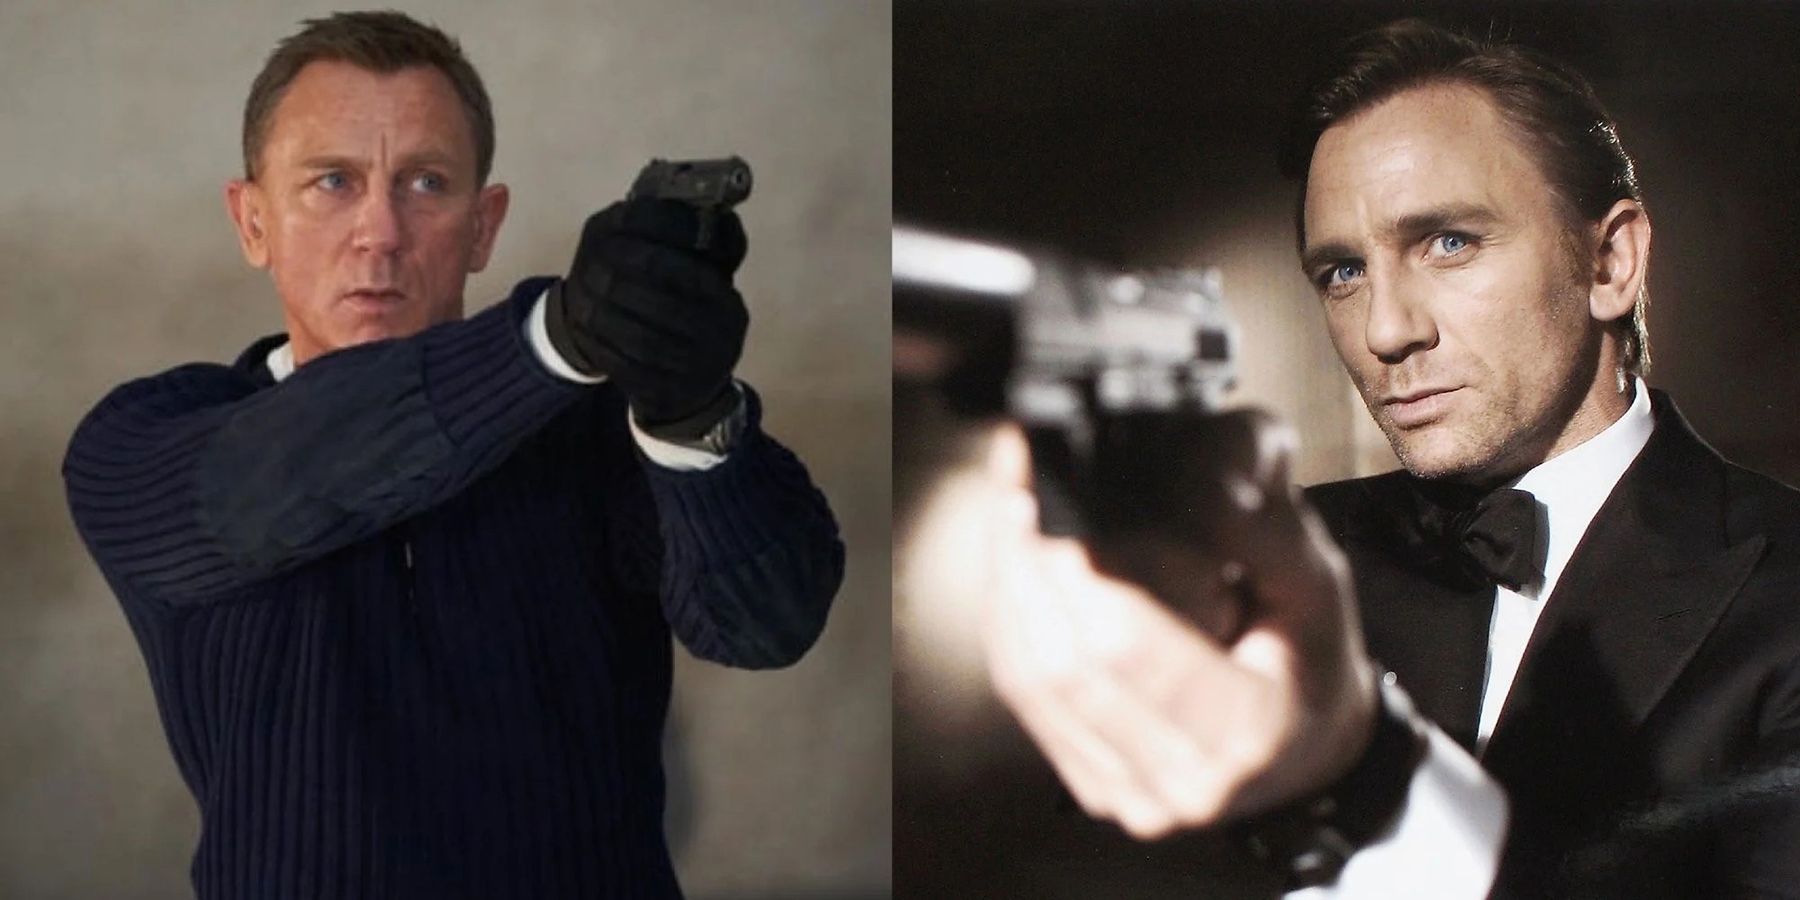 Daniel Craig Told To Make 4 More James Bond Films After Casino Royale